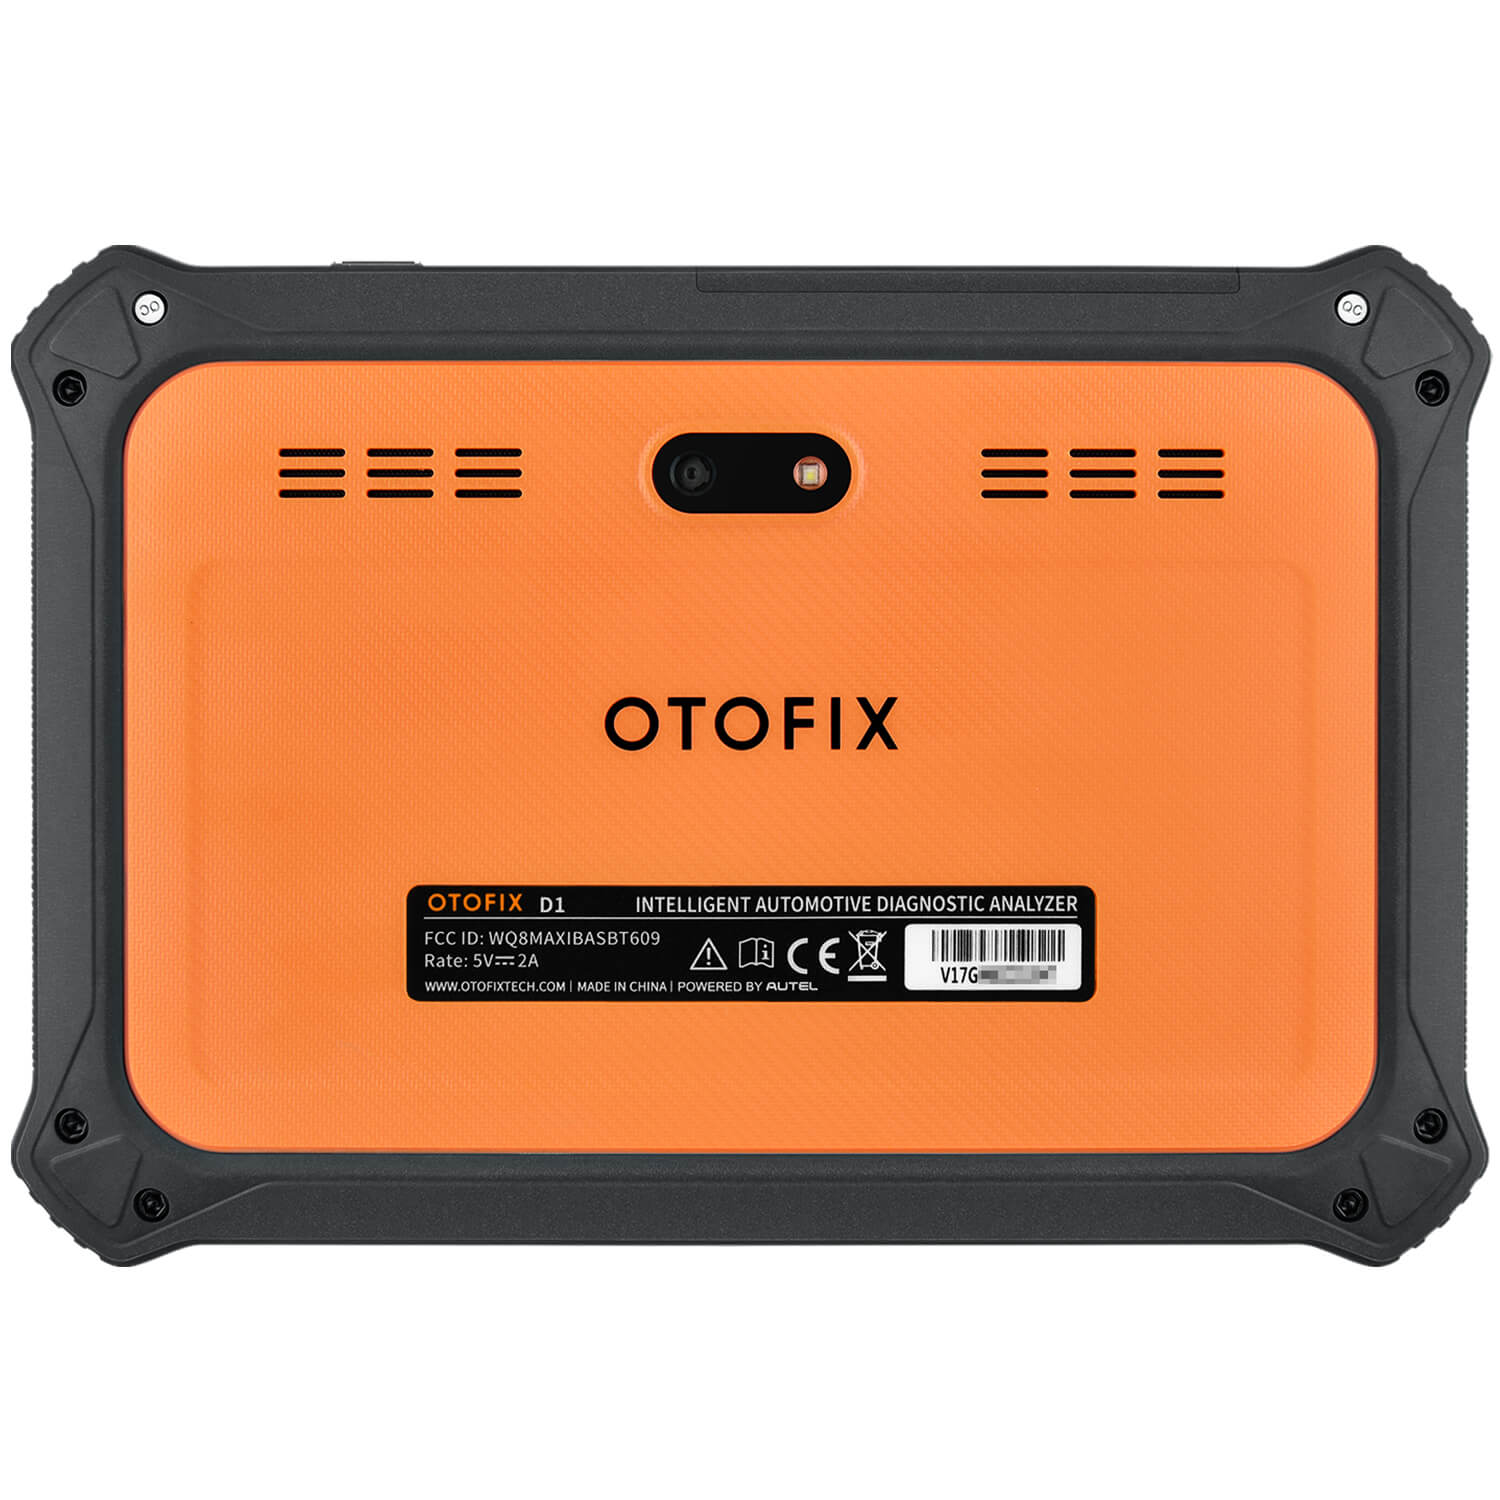 OTOFIX D1 Automotive Diagnostic Scan Tool